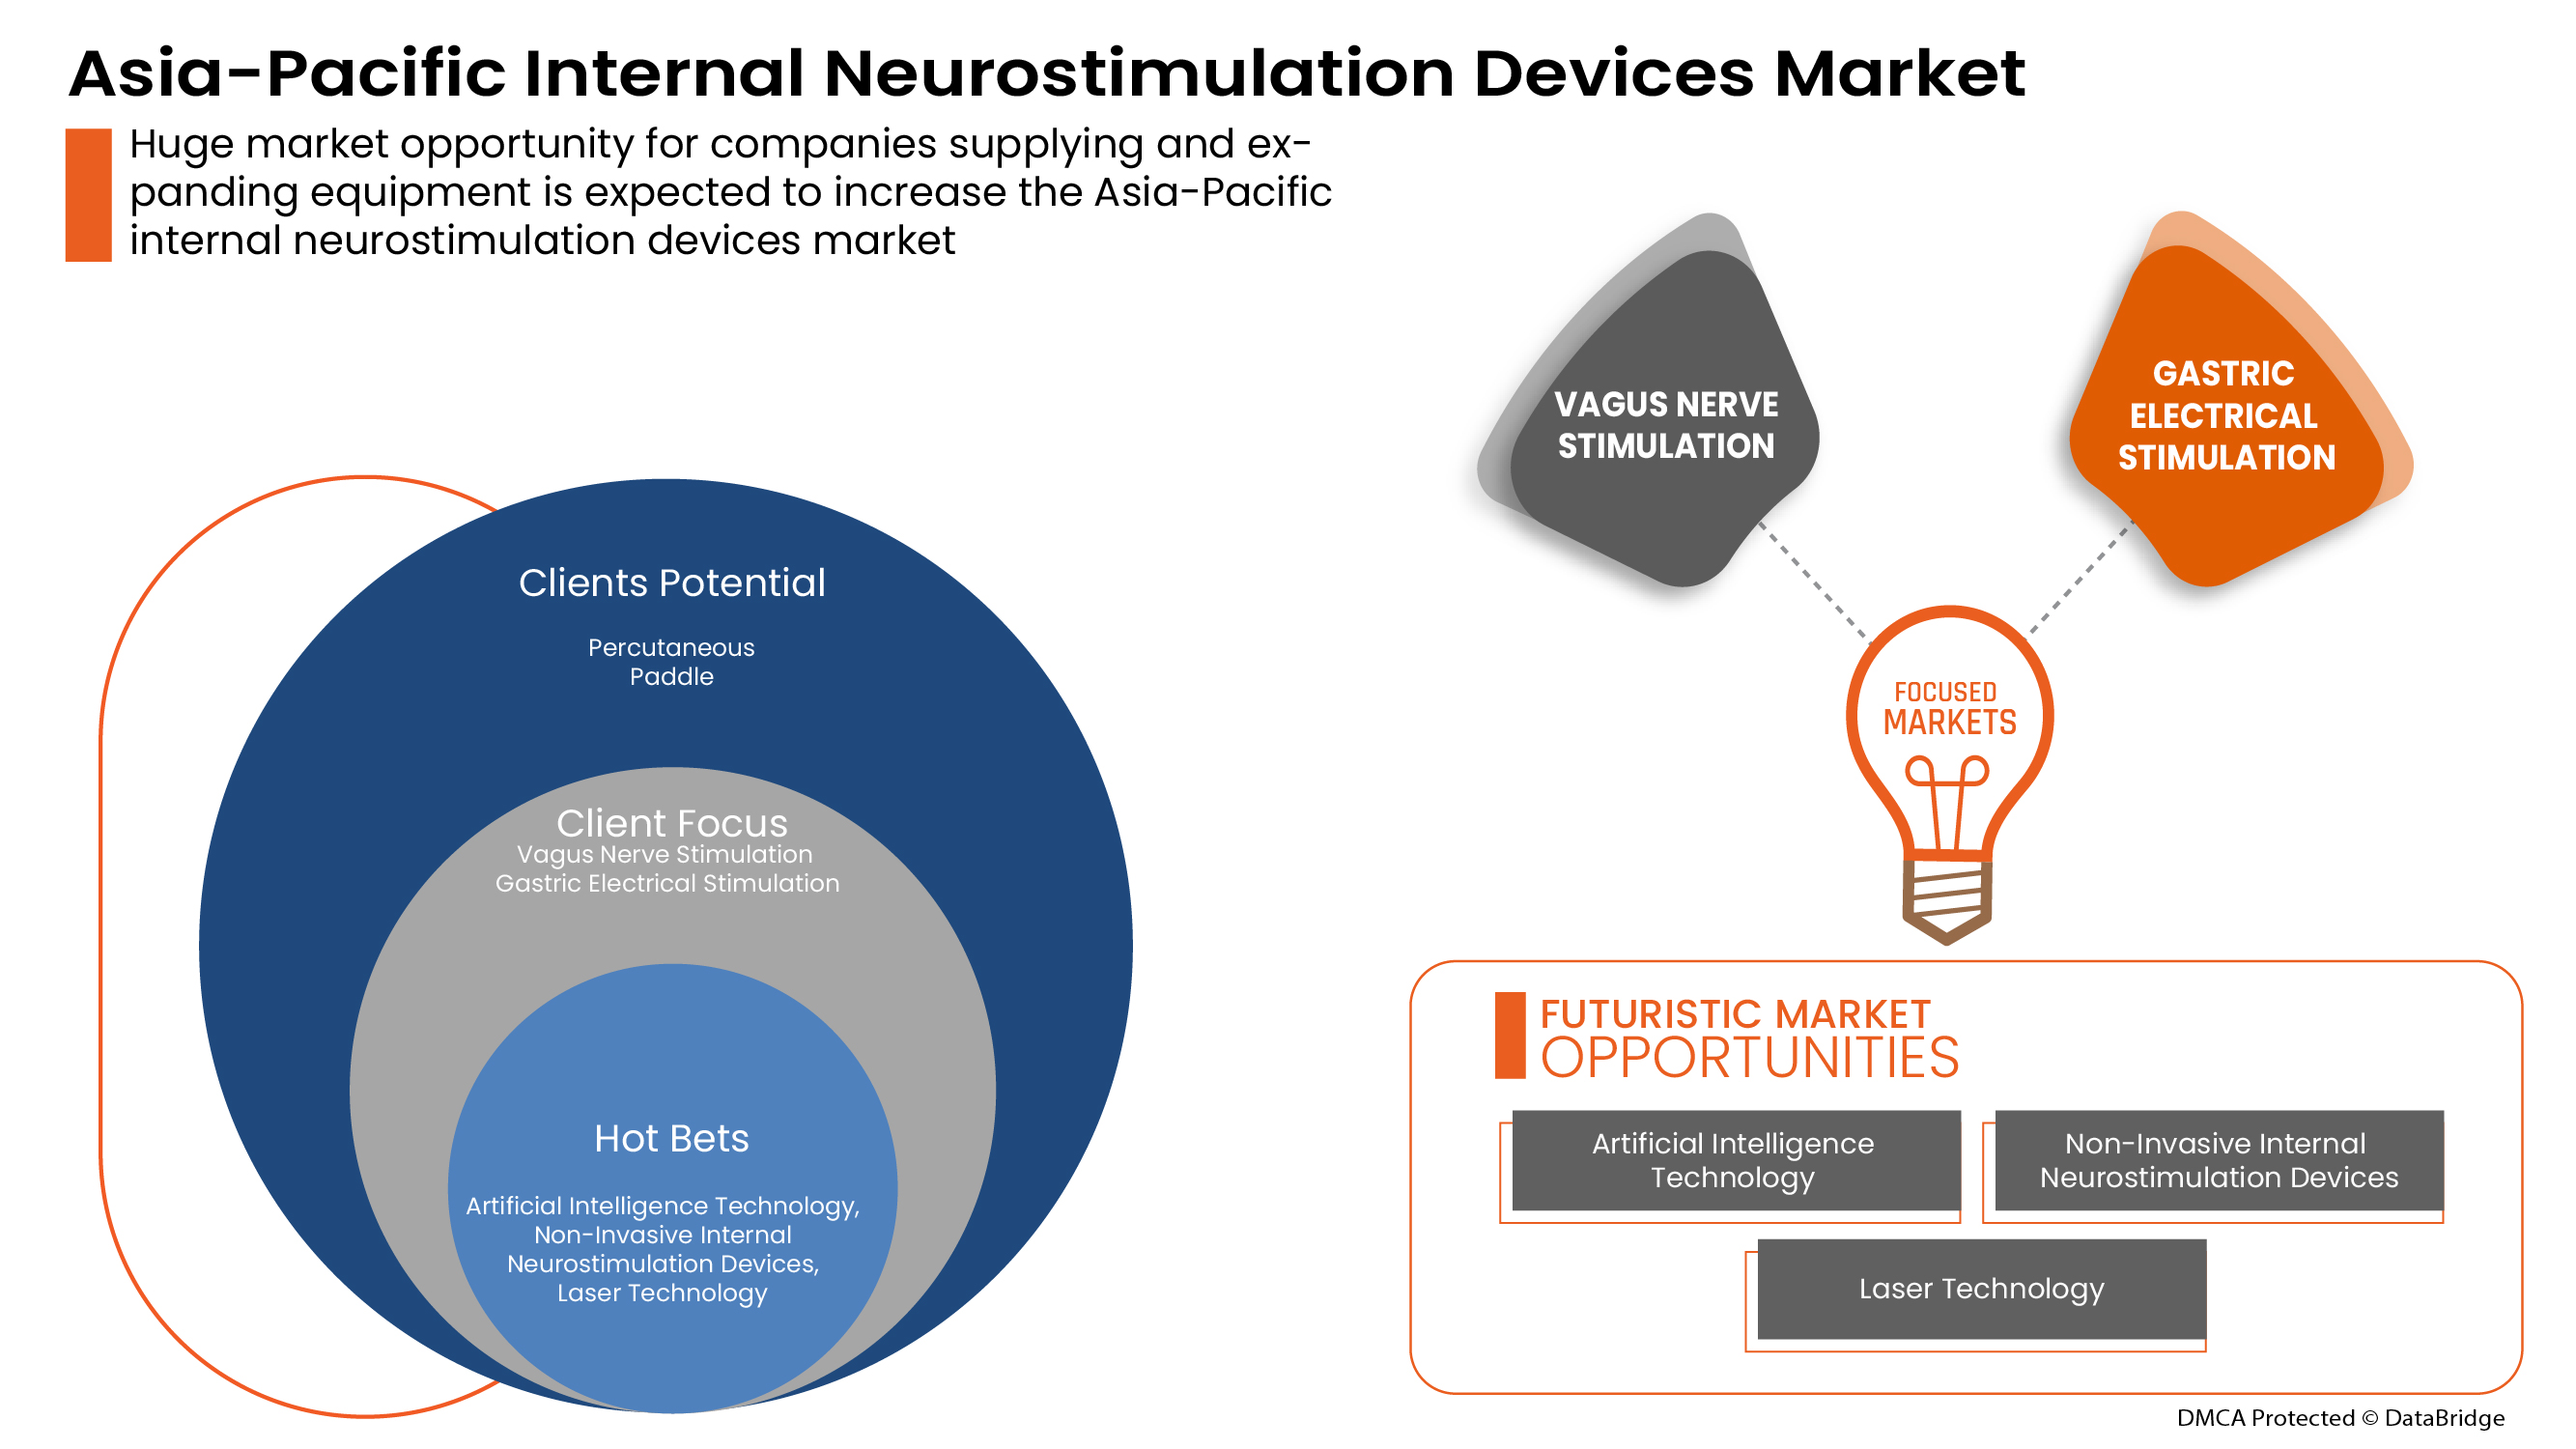 Asia-Pacific Internal Neurostimulation Devices Market